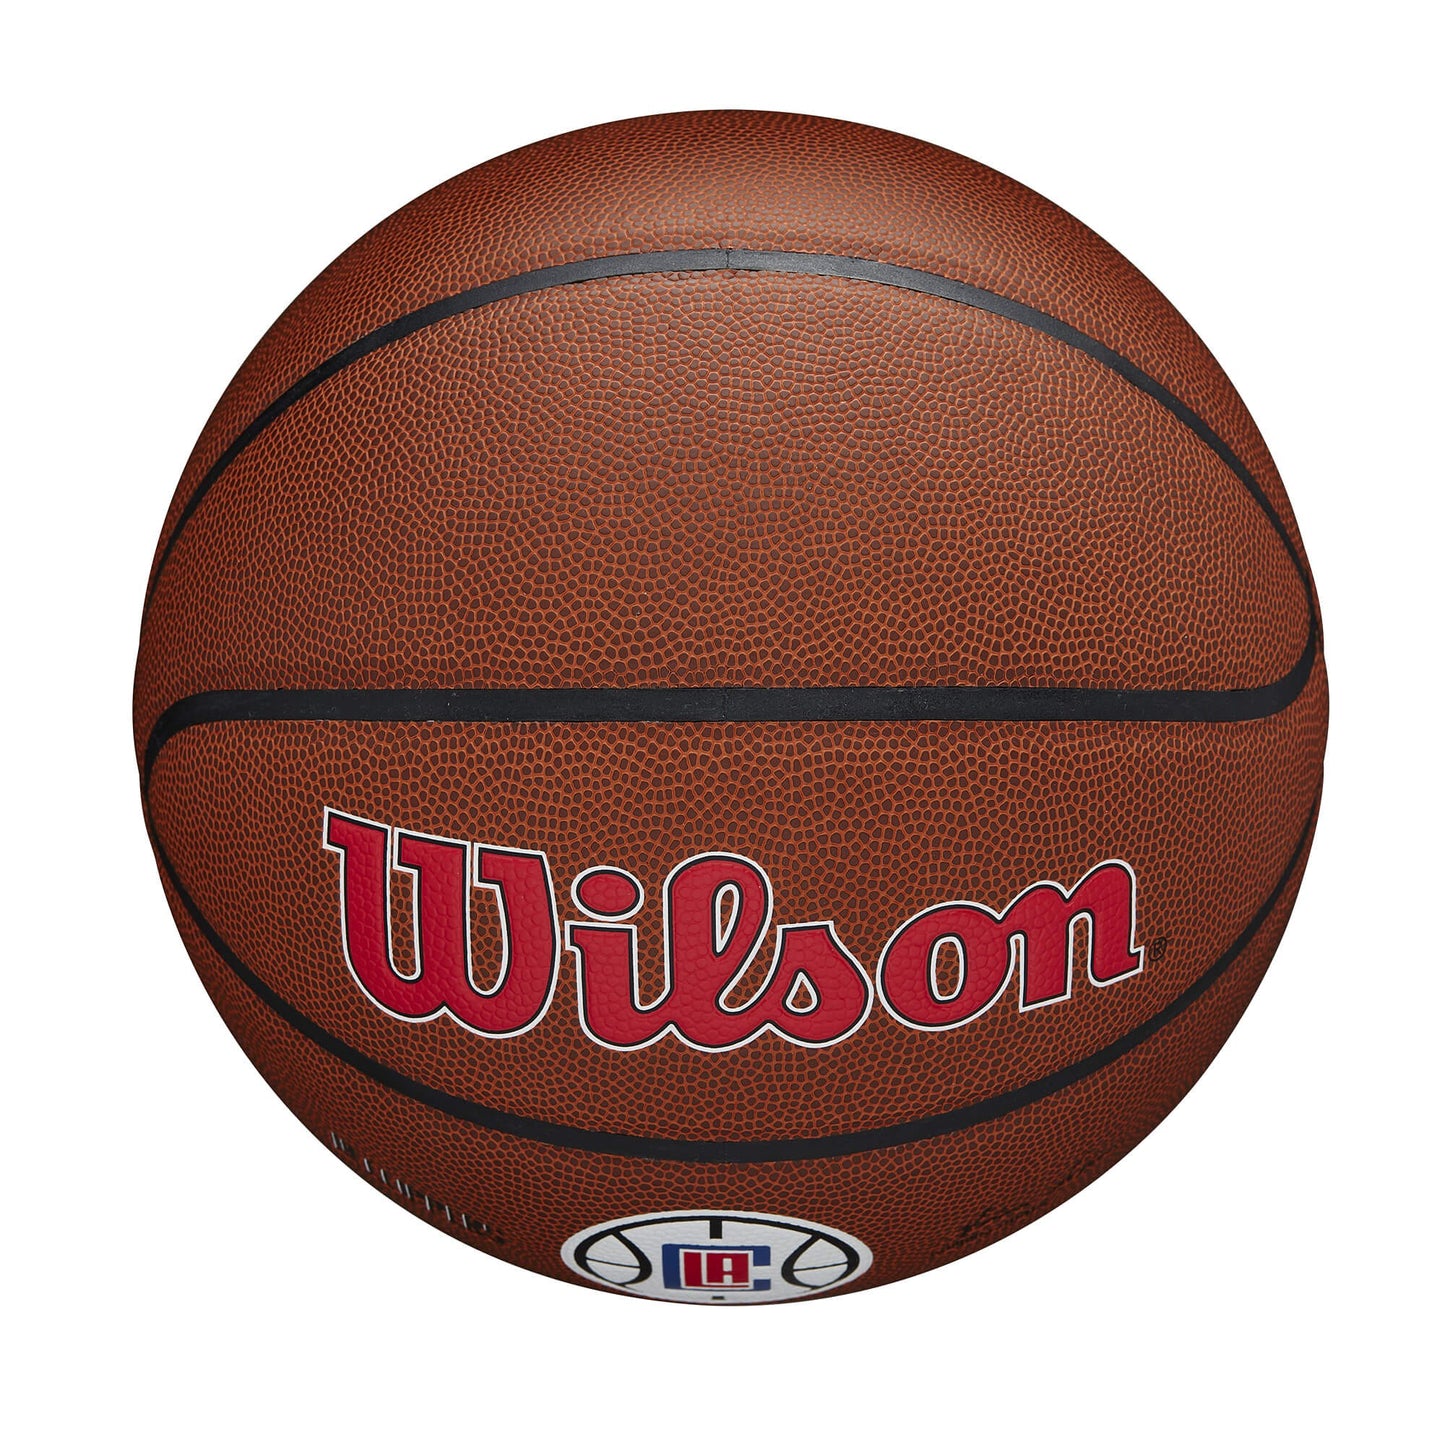 Wilson NBA Team Alliance Composite Basketball Los Angeles Clippers (sz. 7)